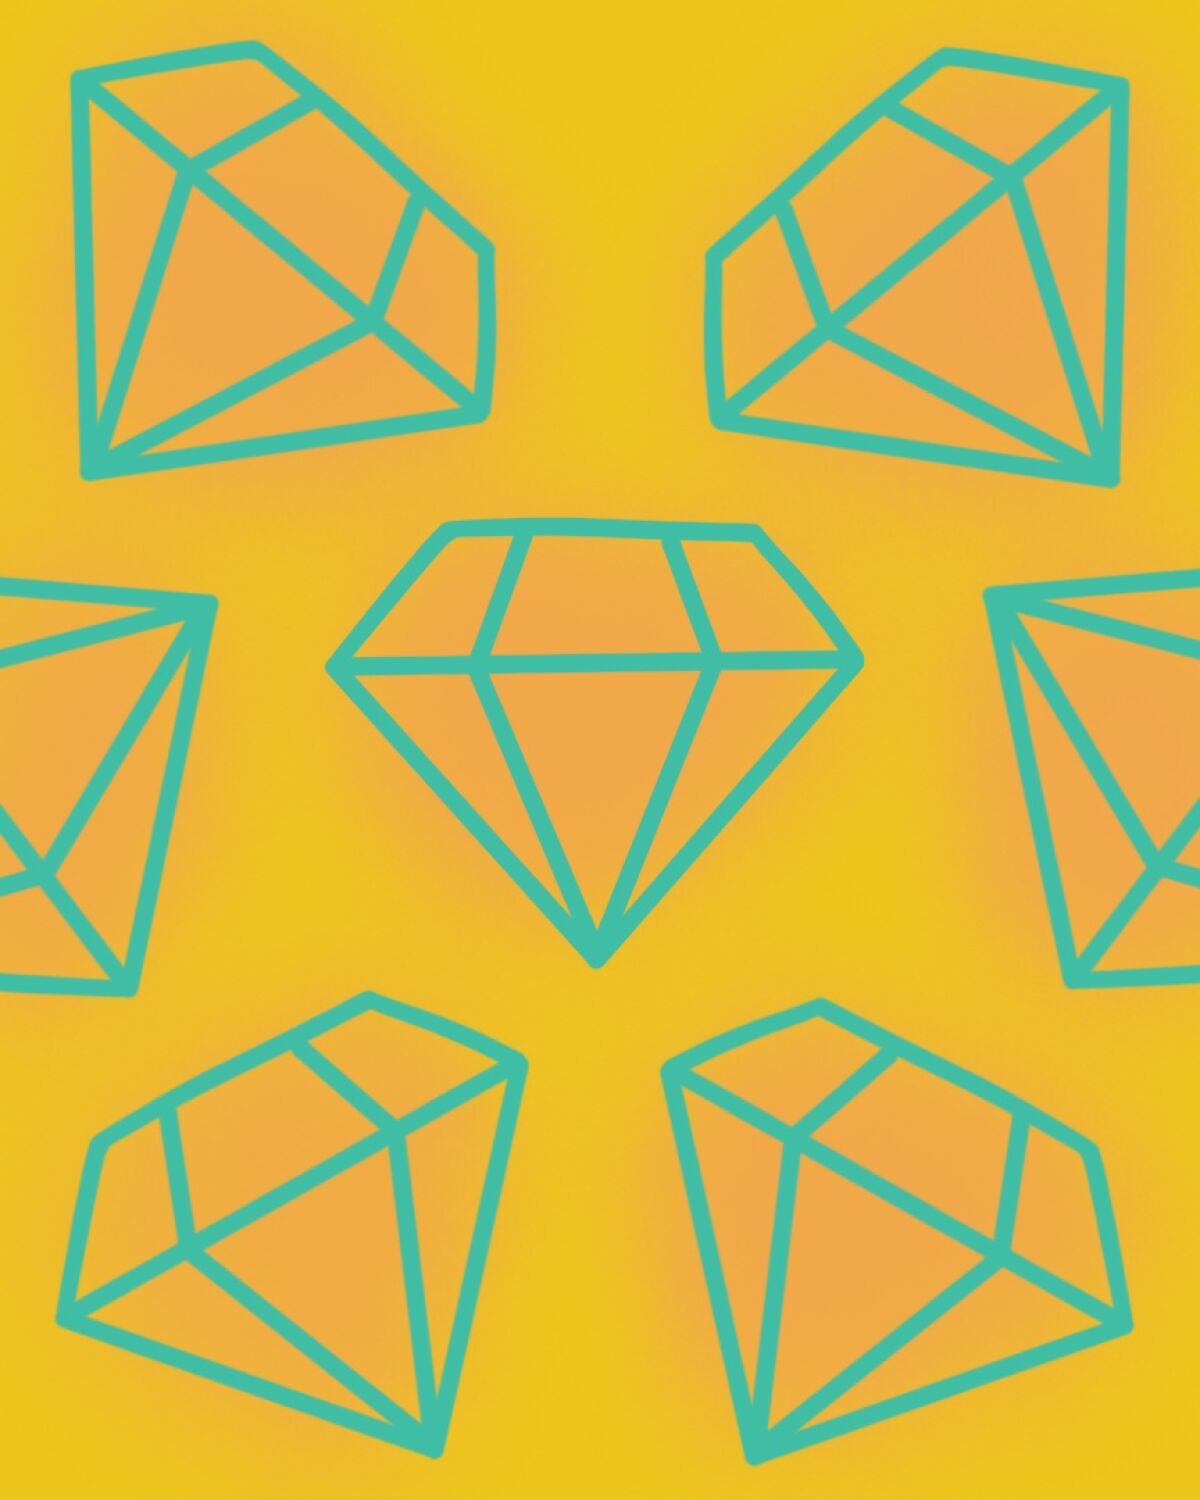 An illustration of geometric gemstones